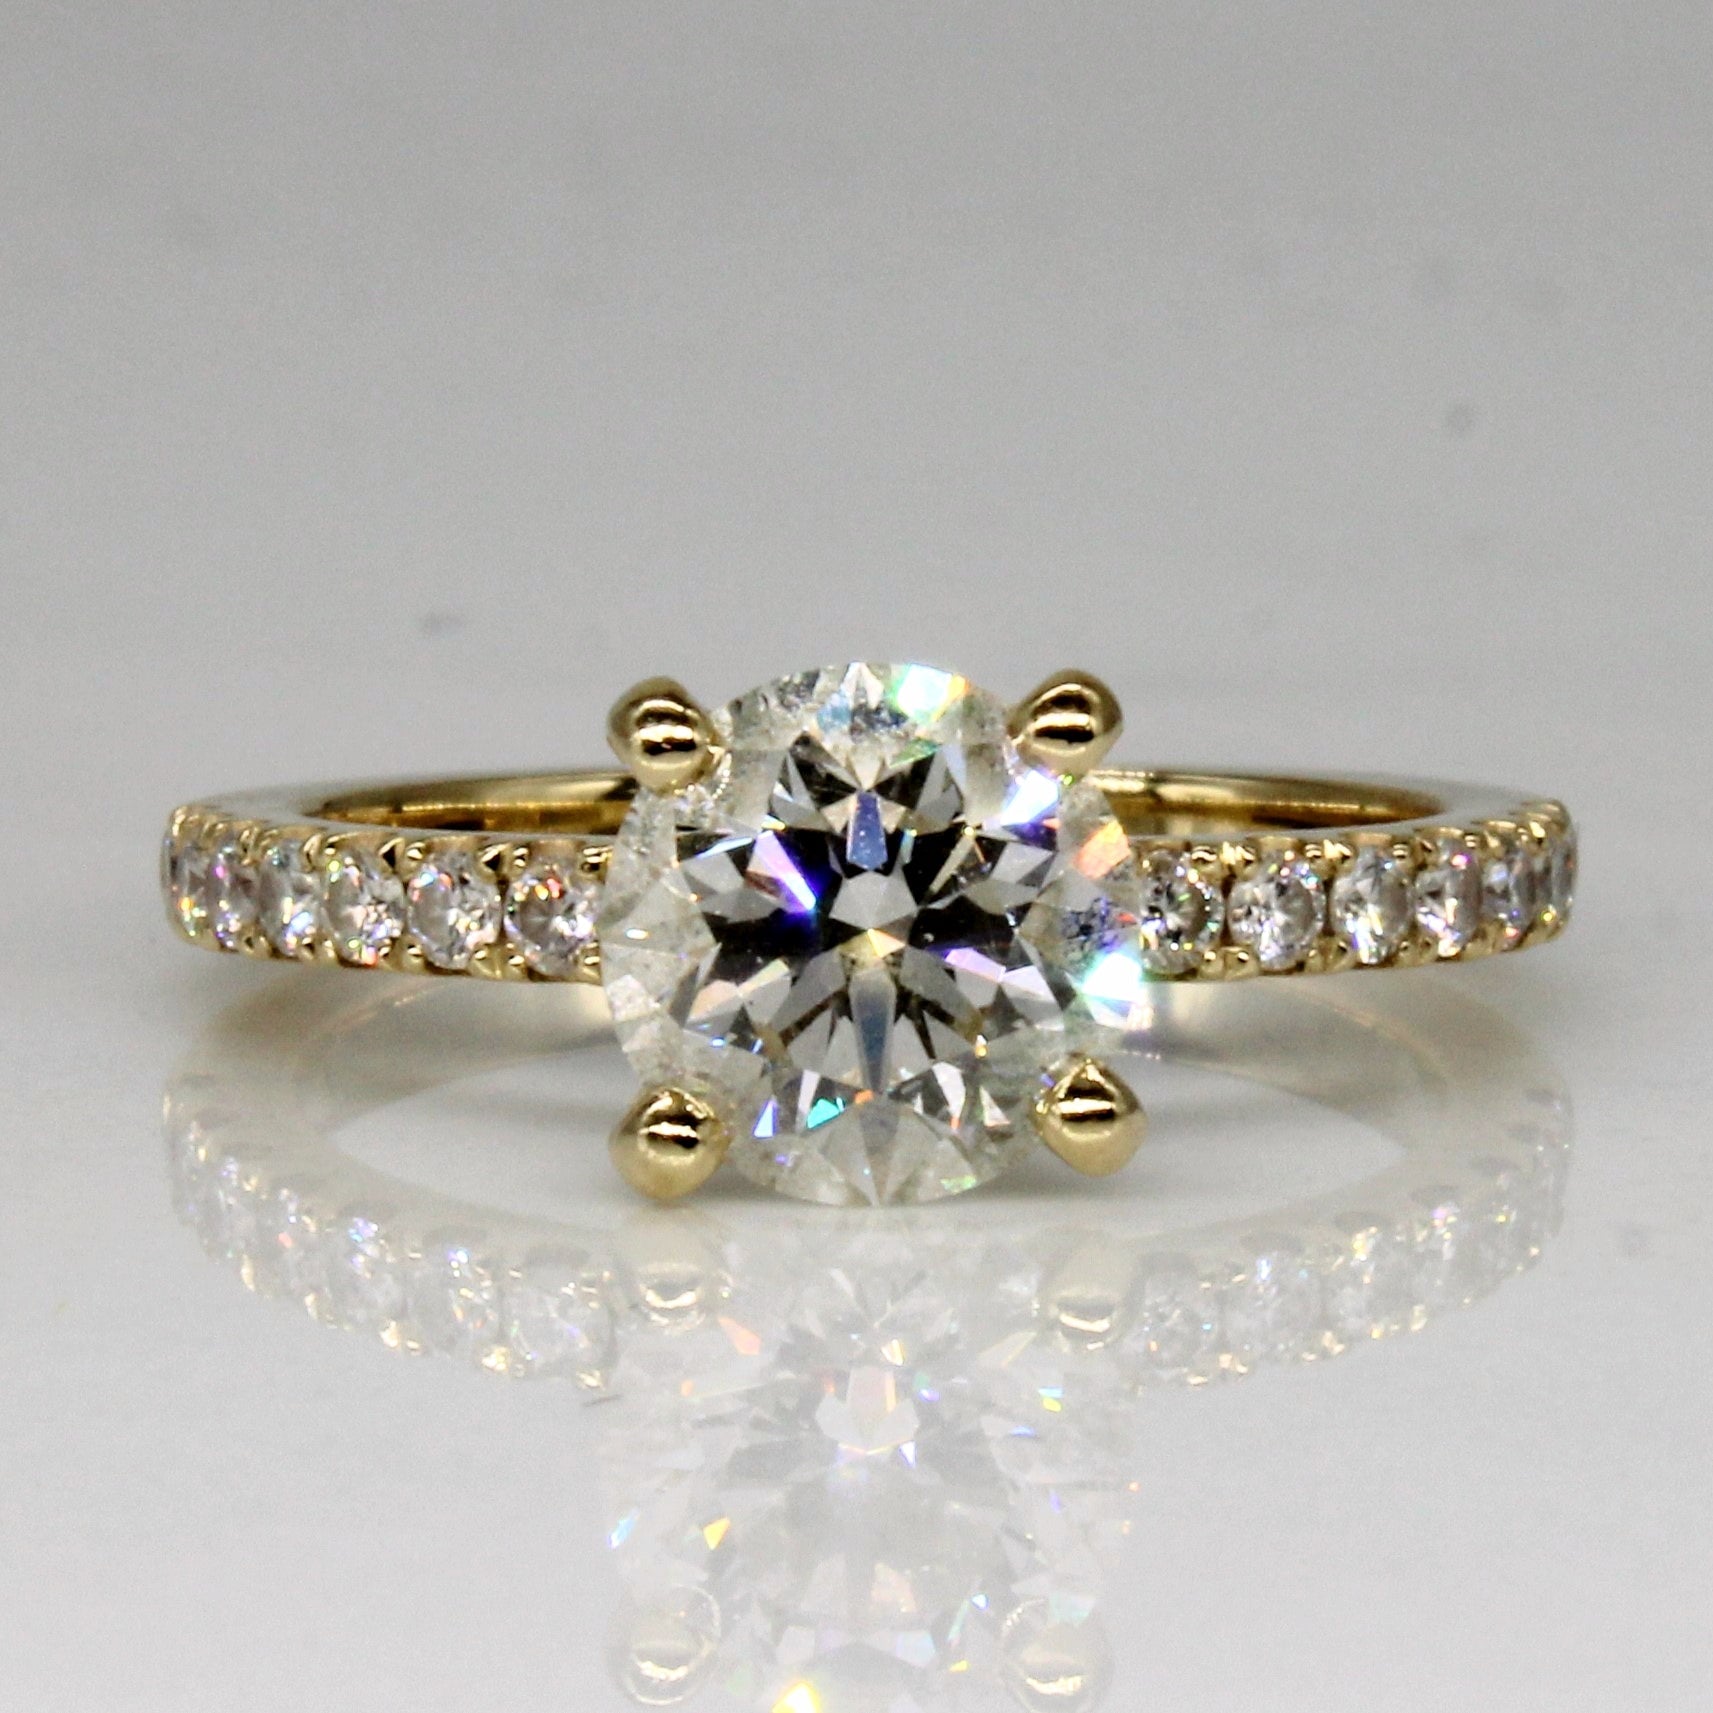 'Cavalier' GIA Diamond Engagement Ring | 1.65ctw SI1 I Ex | SZ 5.5 | - 100 Ways